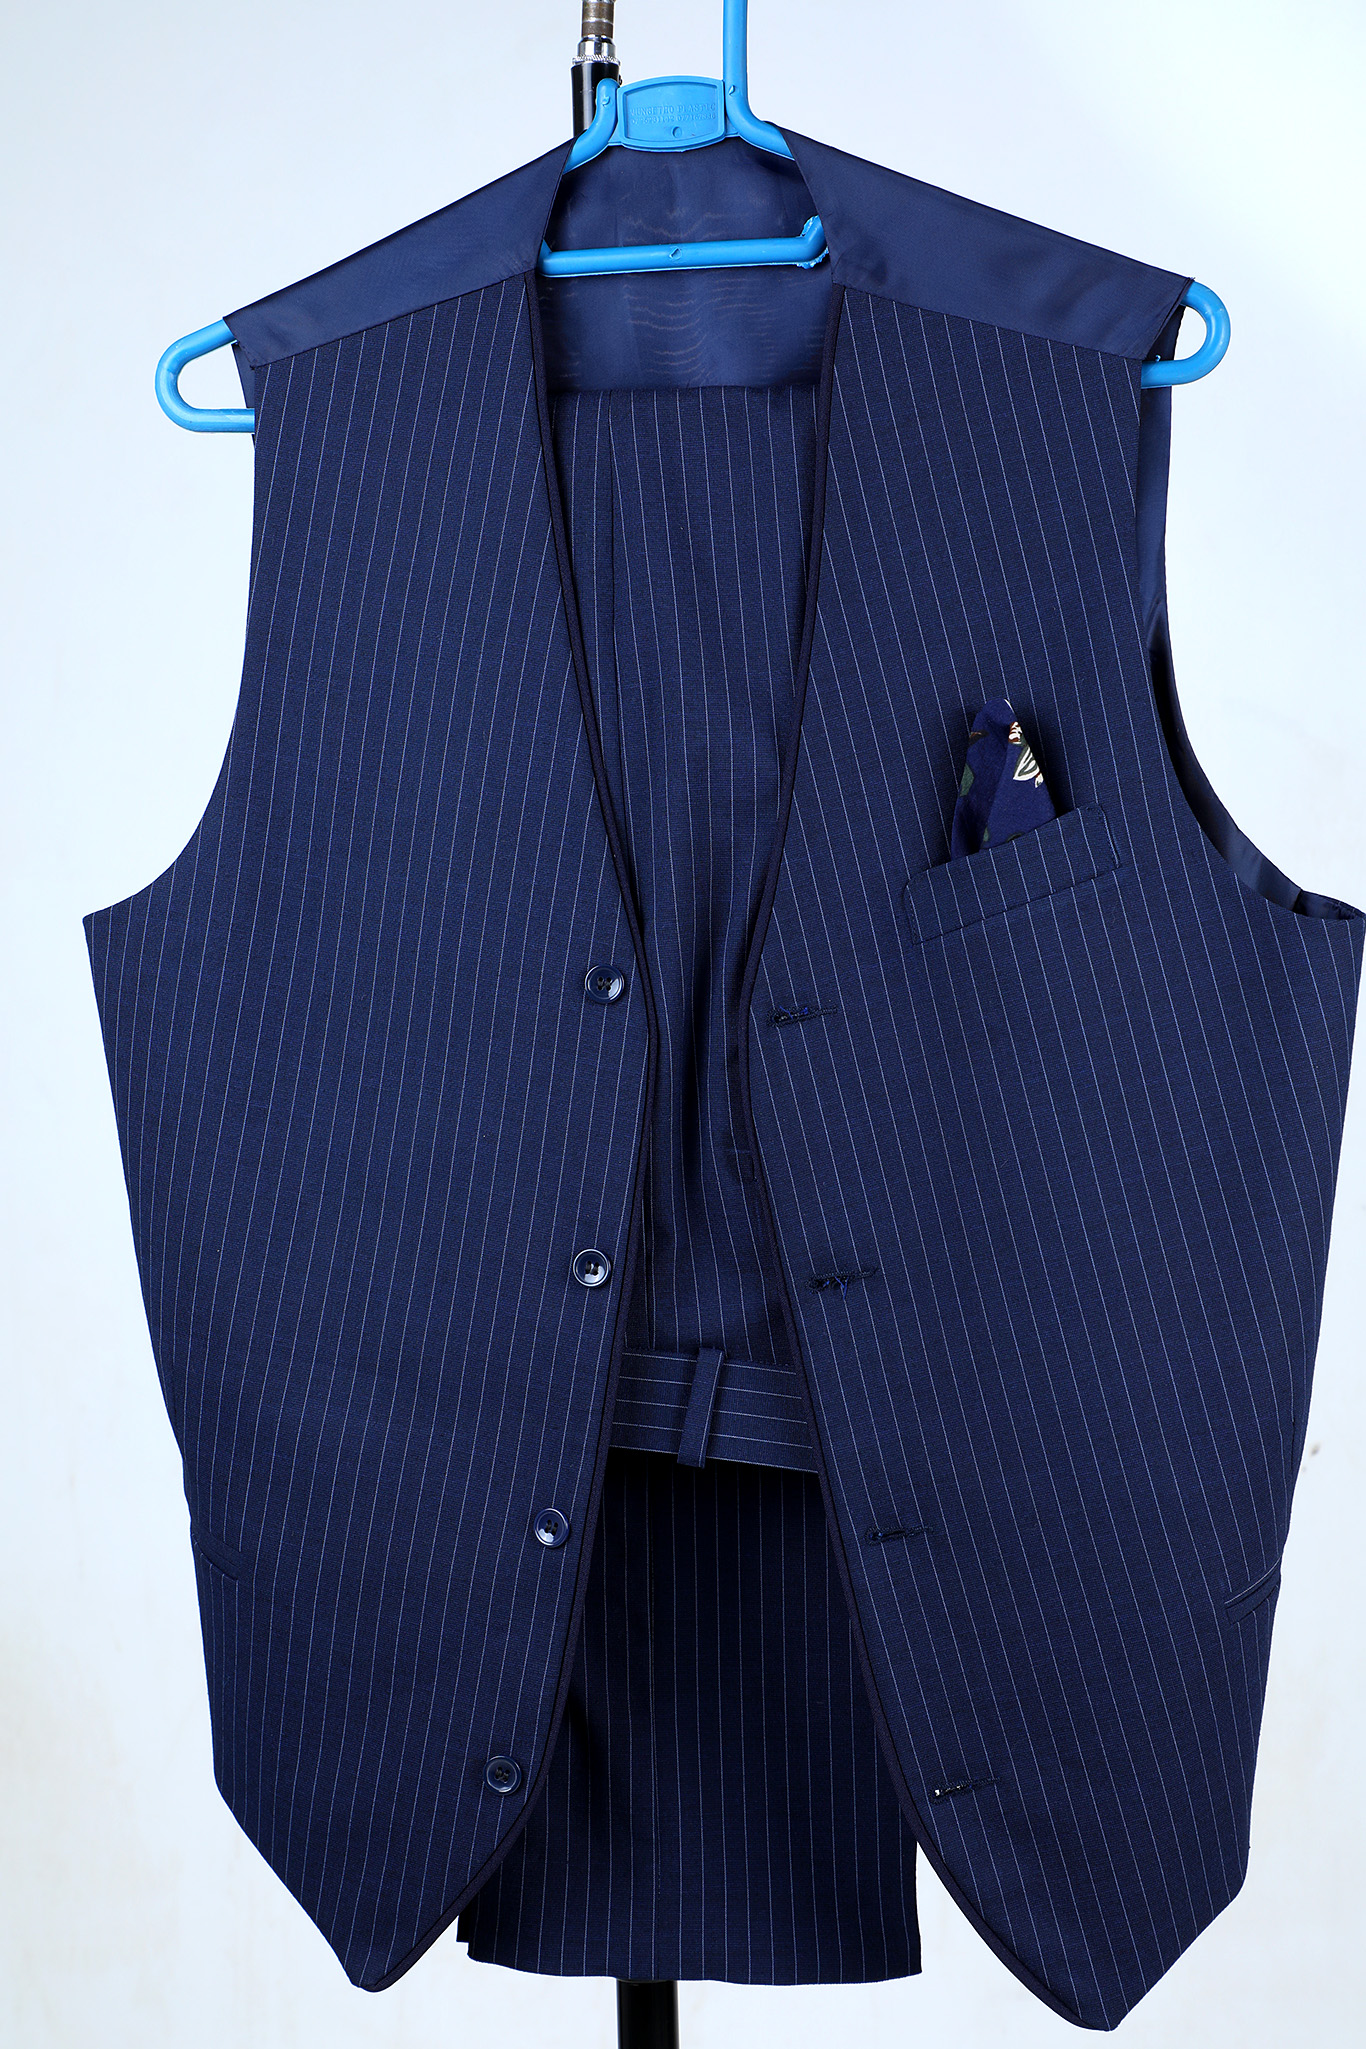 Blue pinstripe 2-piece waistcoat suit for men in Nairobi Kenya